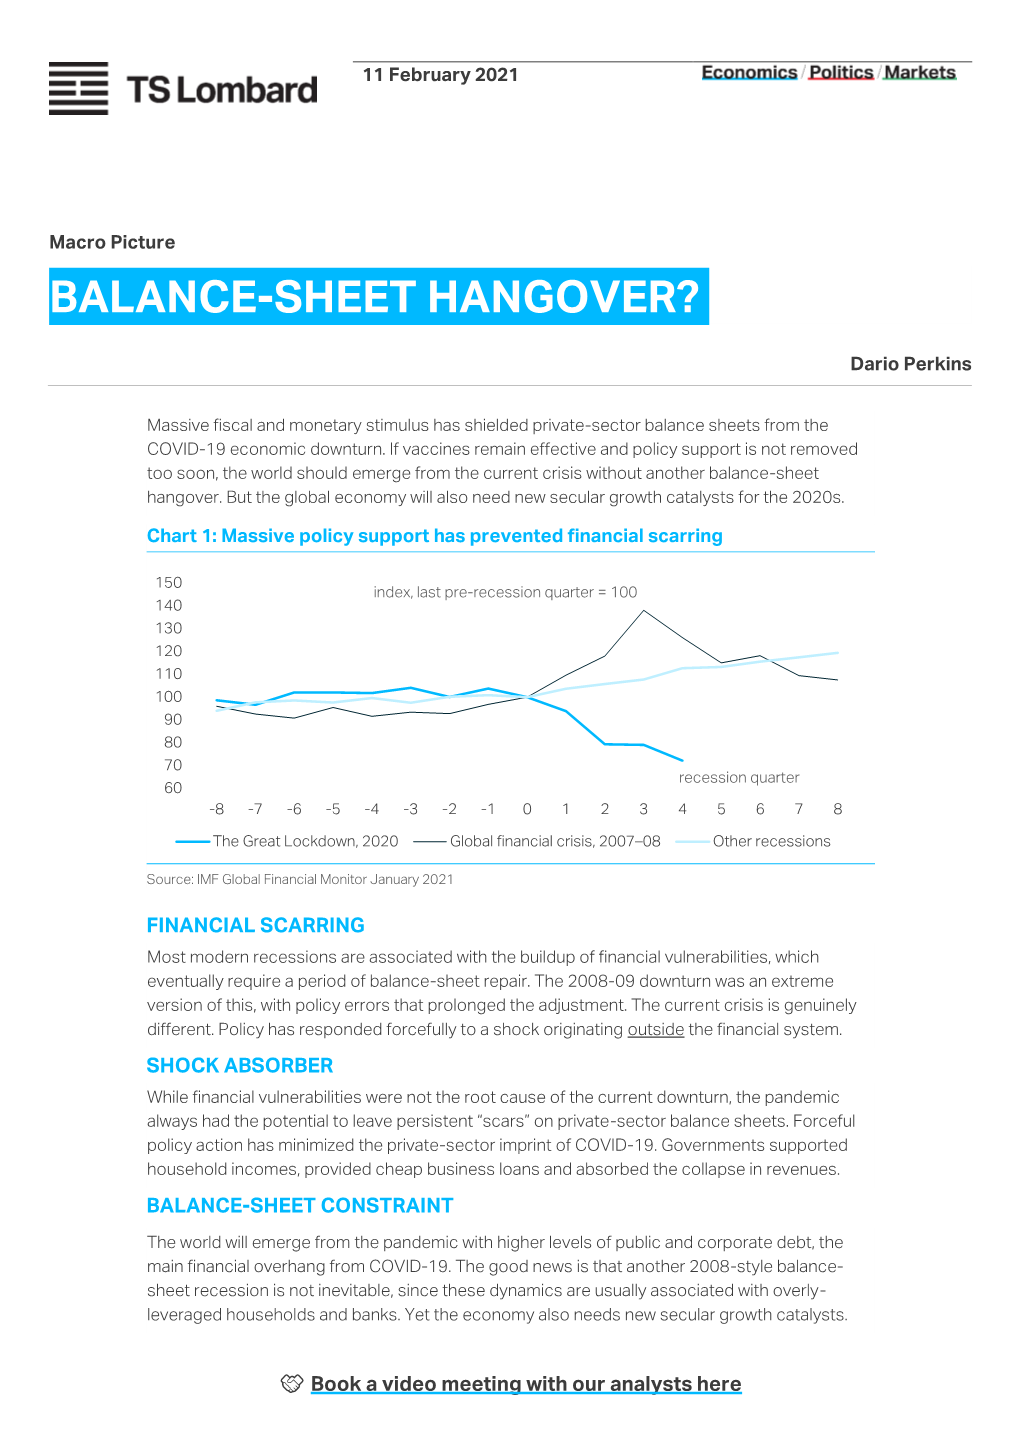 Balance-Sheet Hangover?